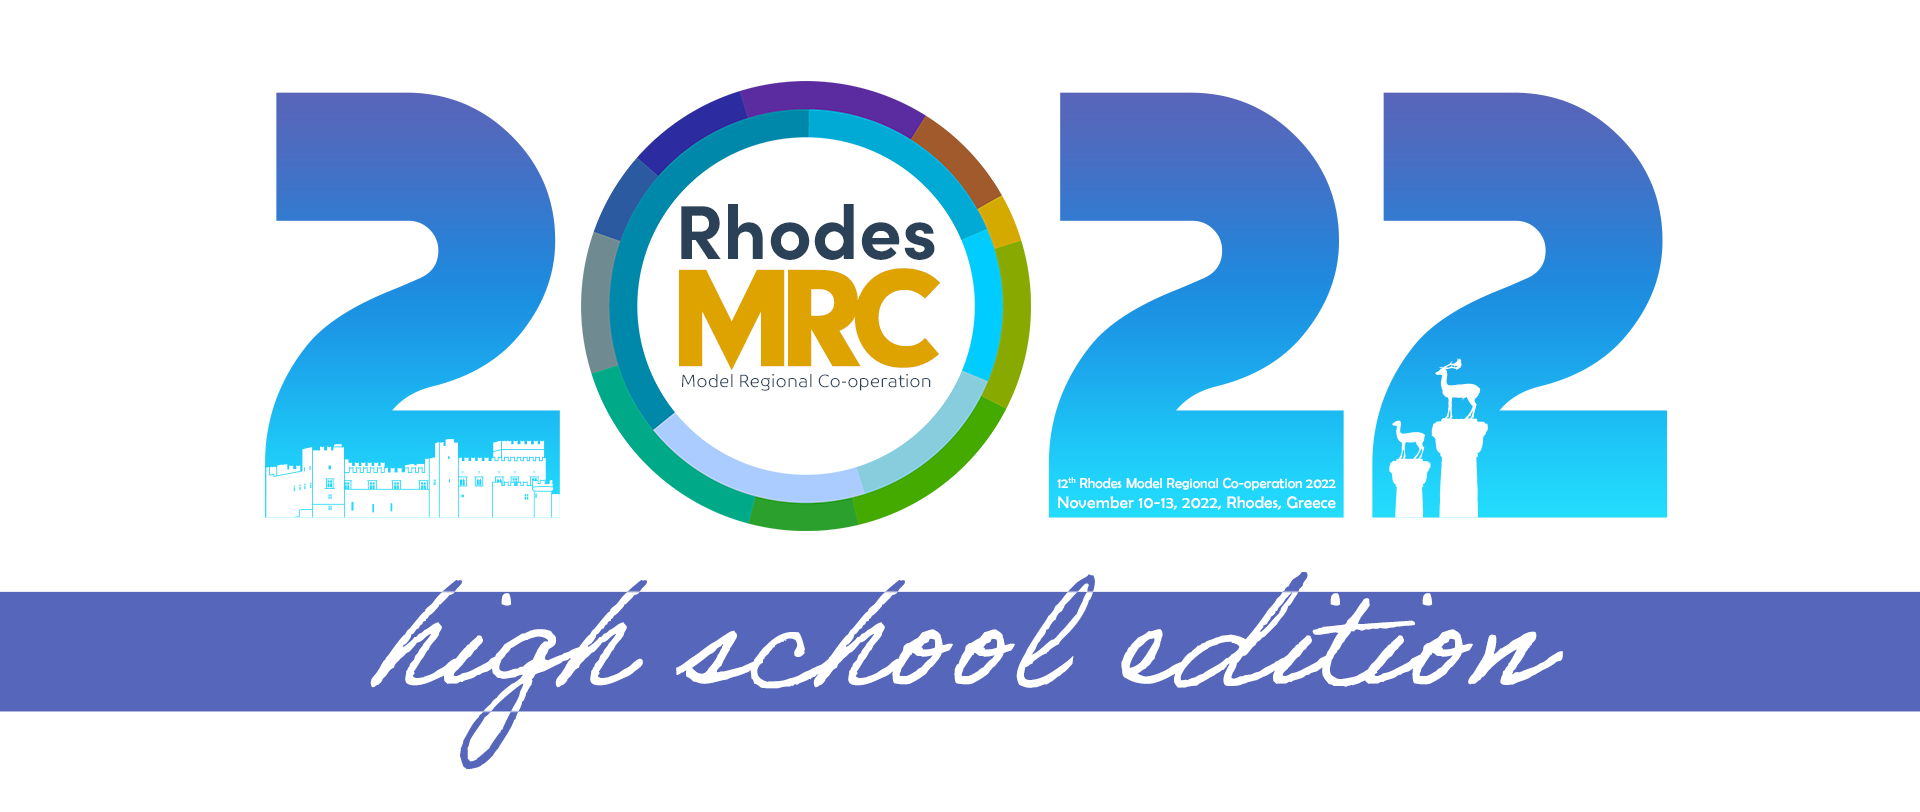 rhodesmrc-logo-2022-hsed-facebook-timeline